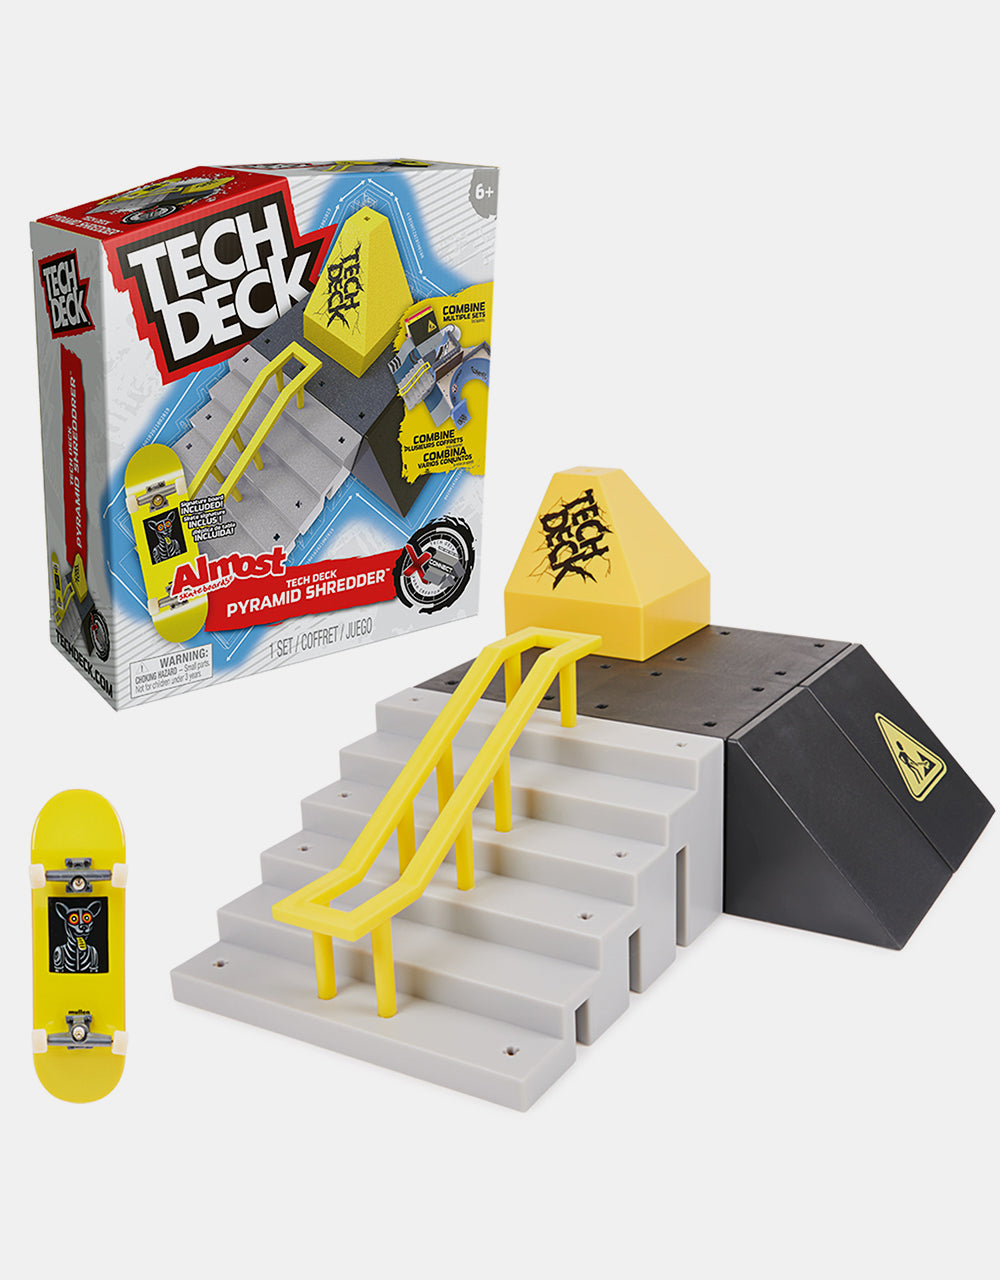 Tech Deck Fingerboard X-Connect Park Starter Kit - Pyramid Shredder